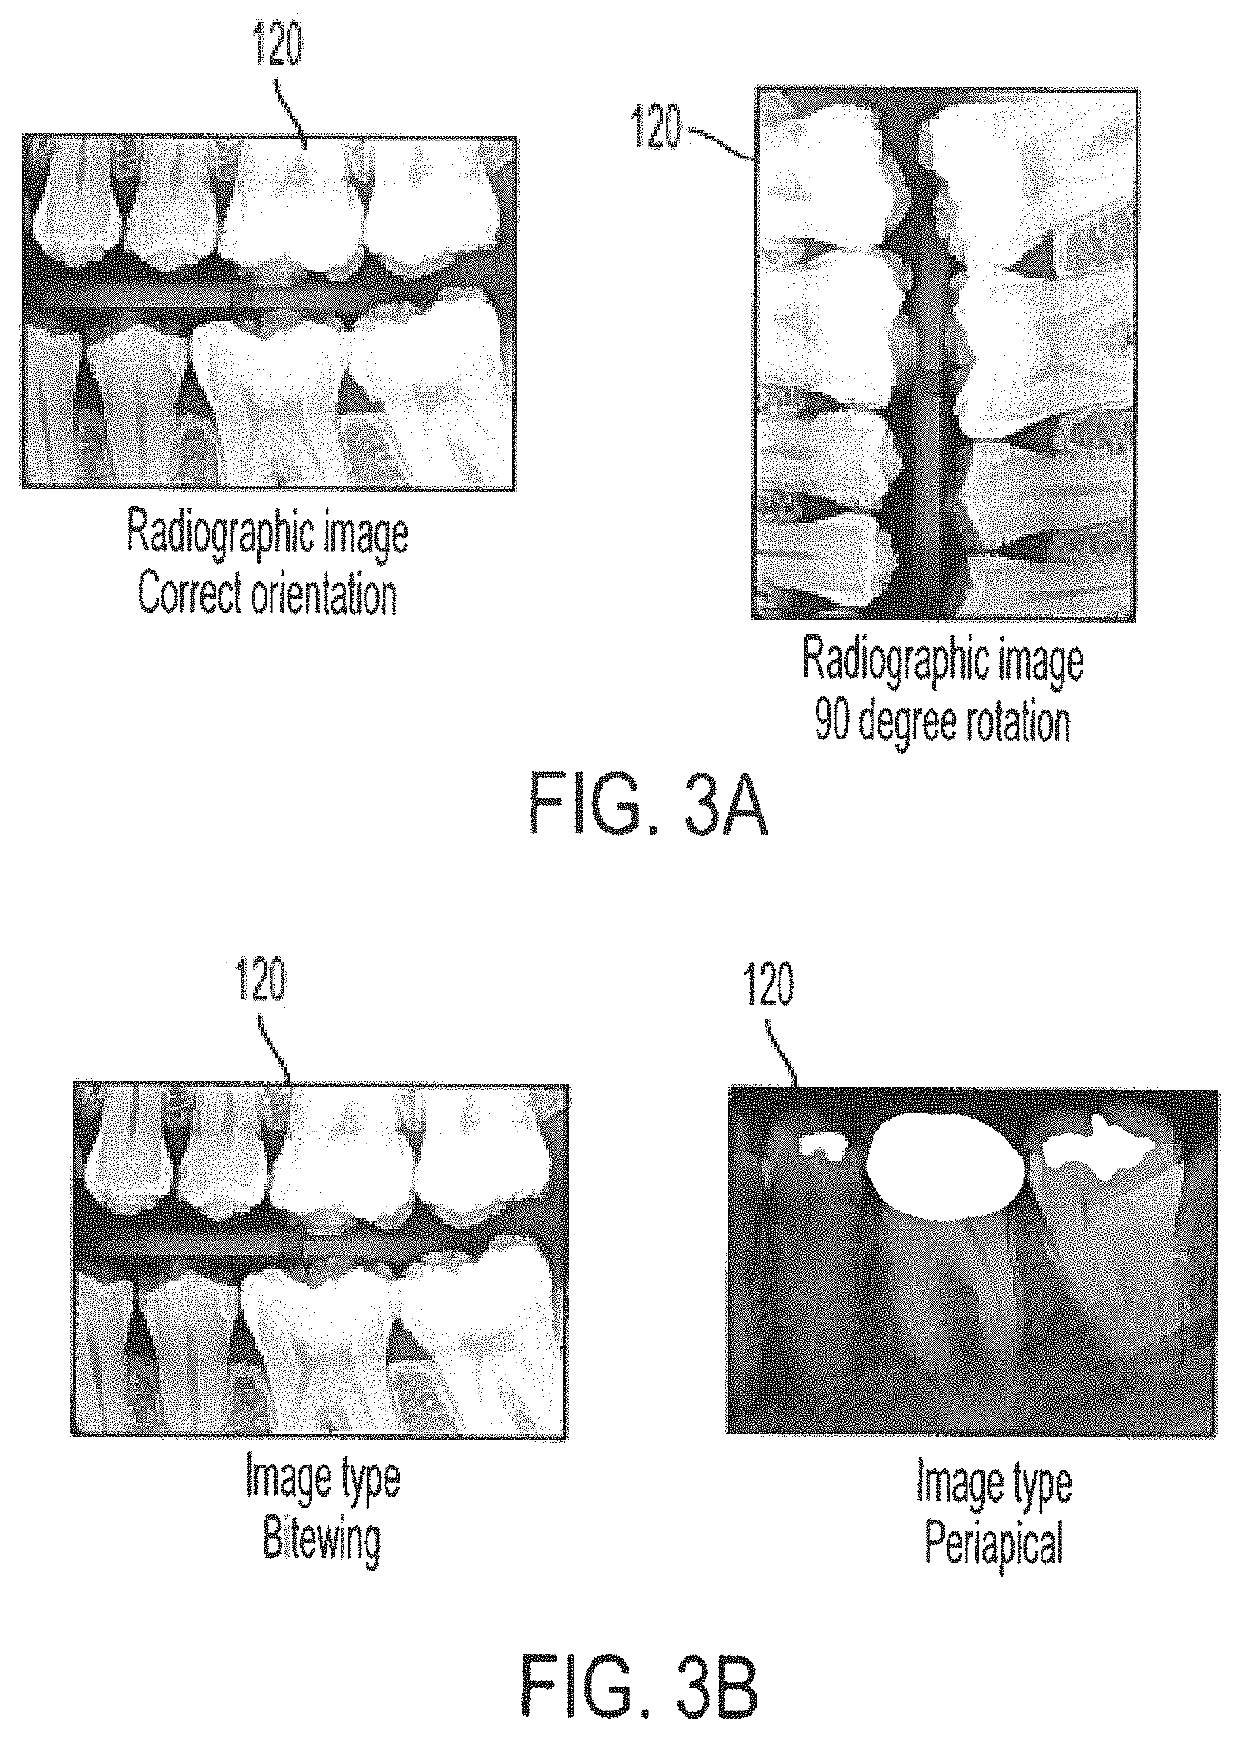 Estimating measurements of craniofacial structures in dental radiographs